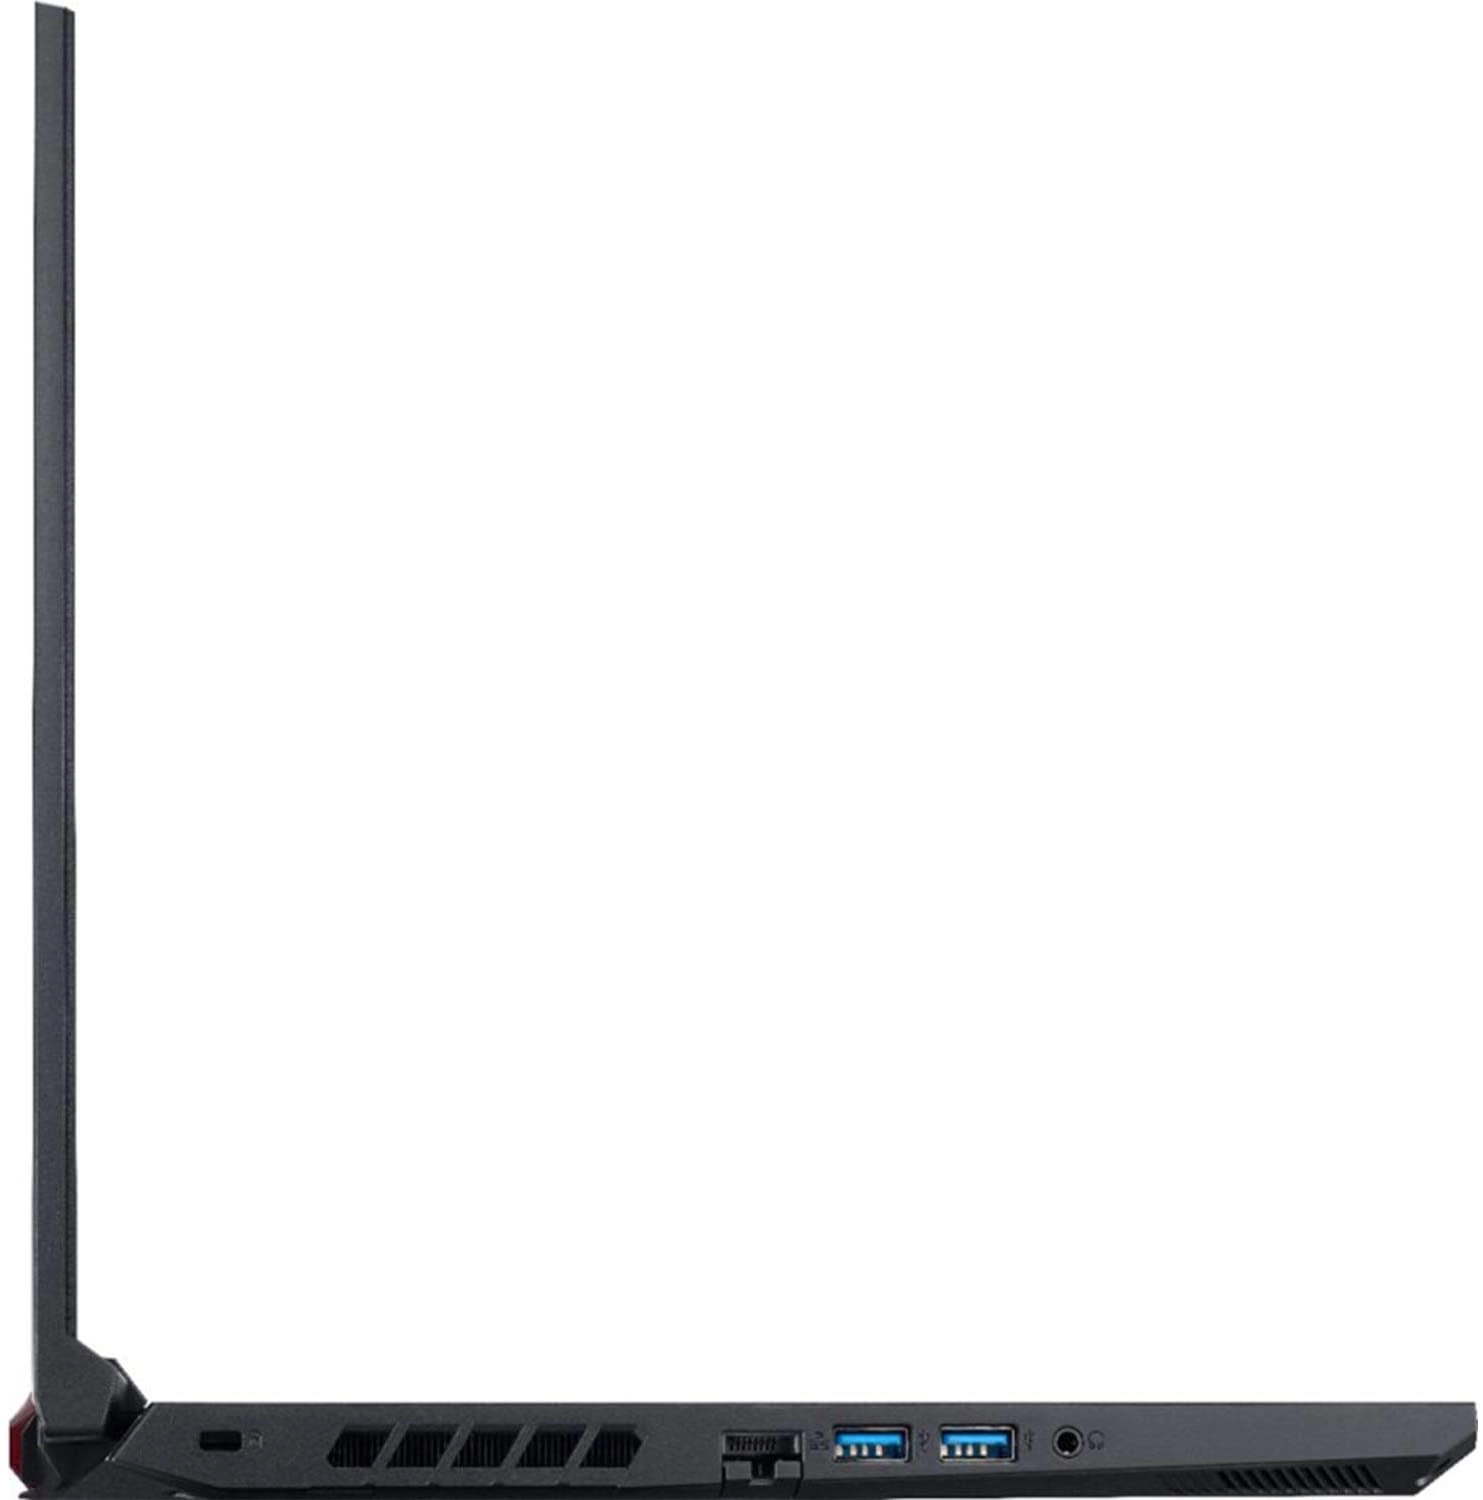 Acer AN515-55 laptop image